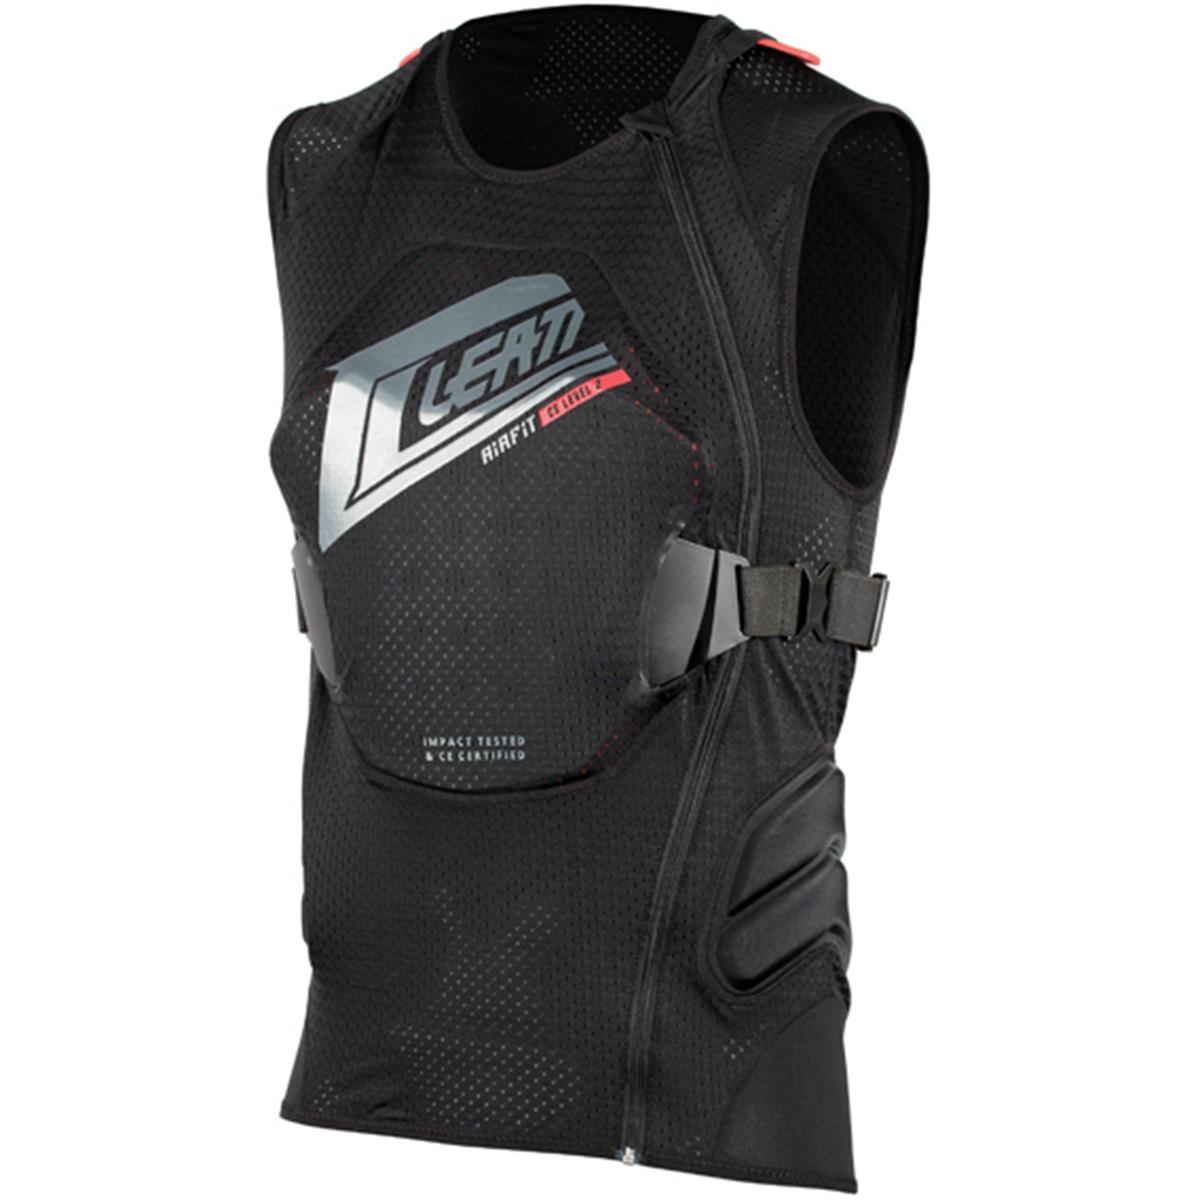 Leatt Protector Vest 3DF AirFit Evo Black